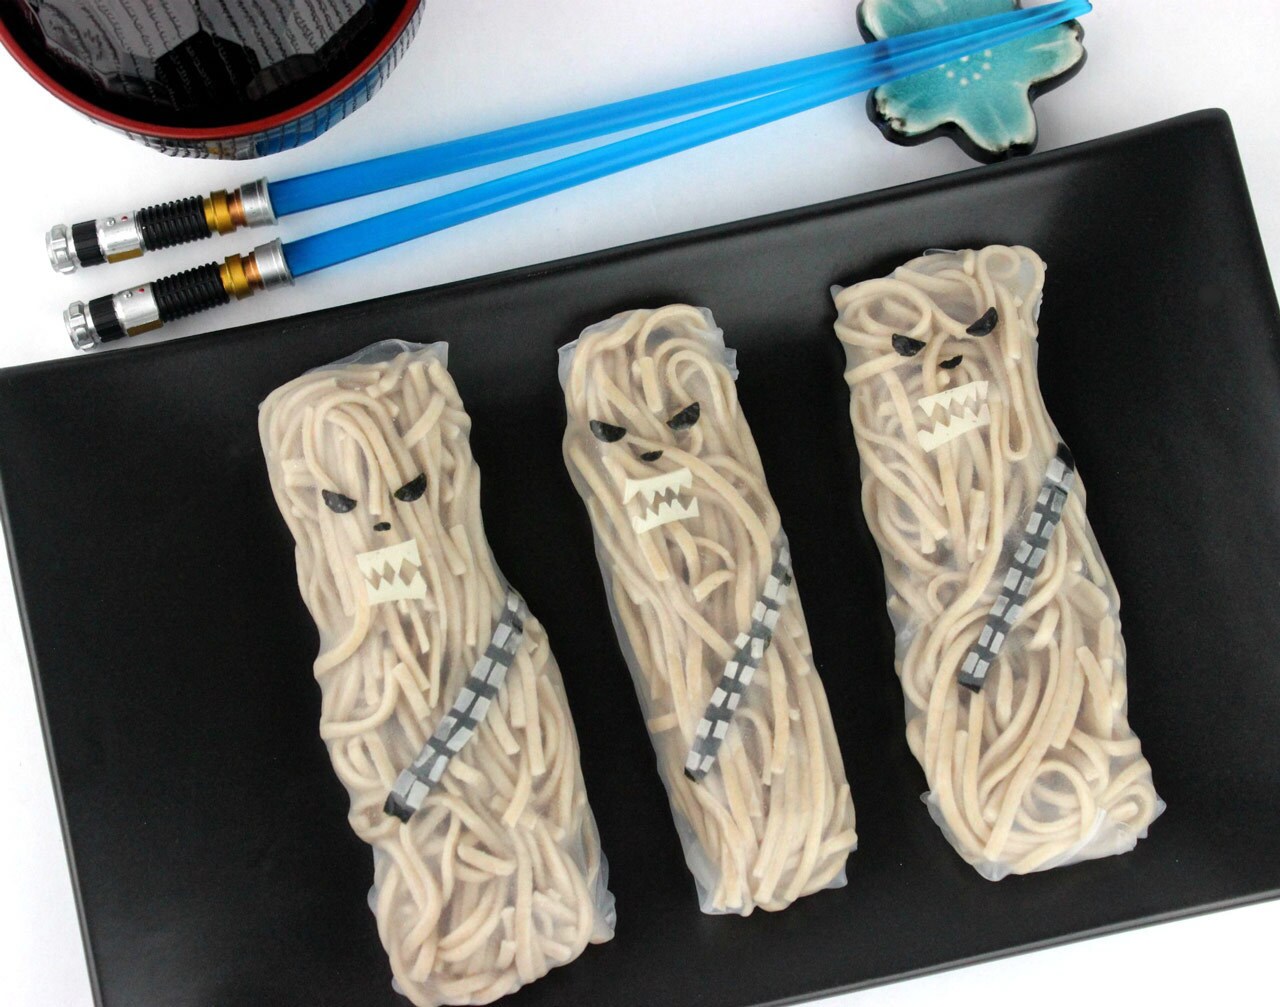 Three Chewbacca noodle rolls.